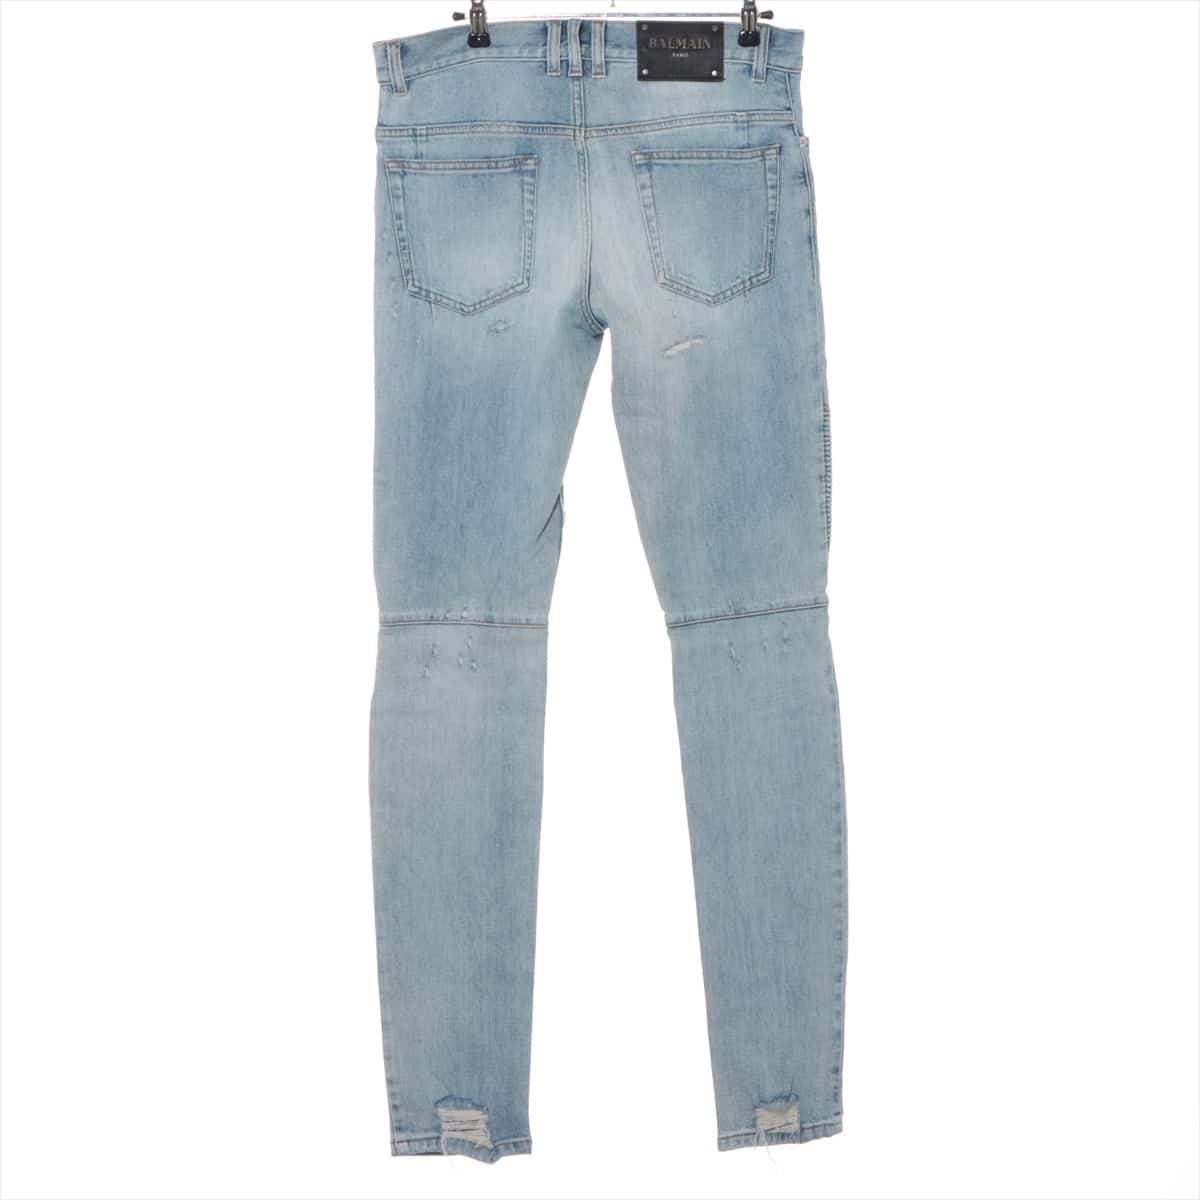 Balmain Cotton Denim pants 30 Men's Light blue  distressed biker jeans biker denim